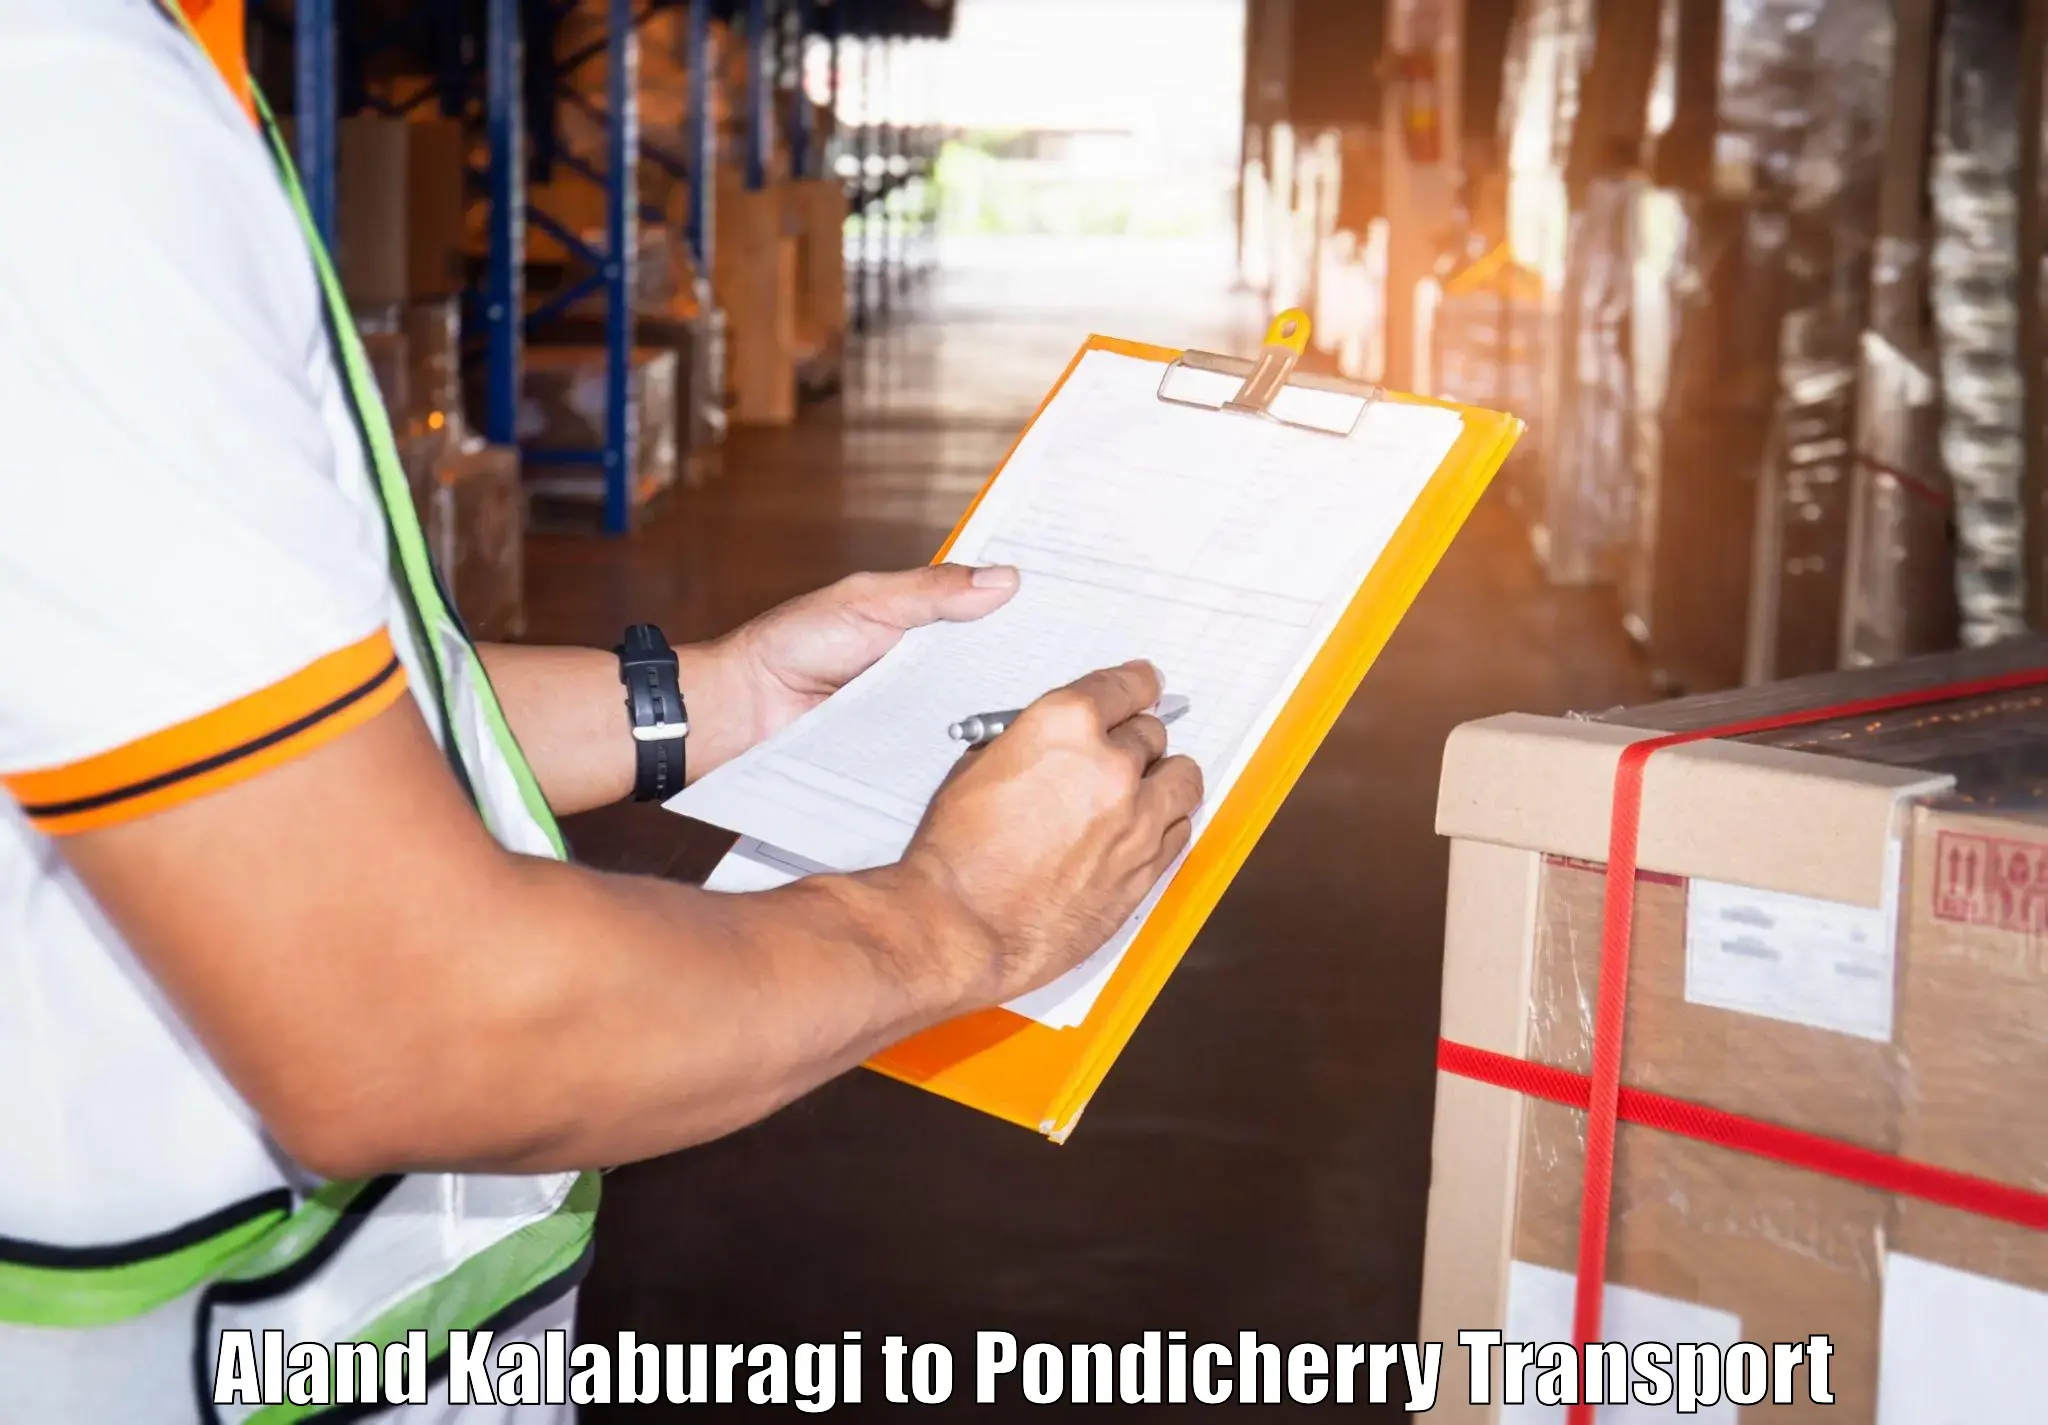 Transport in sharing Aland Kalaburagi to Pondicherry